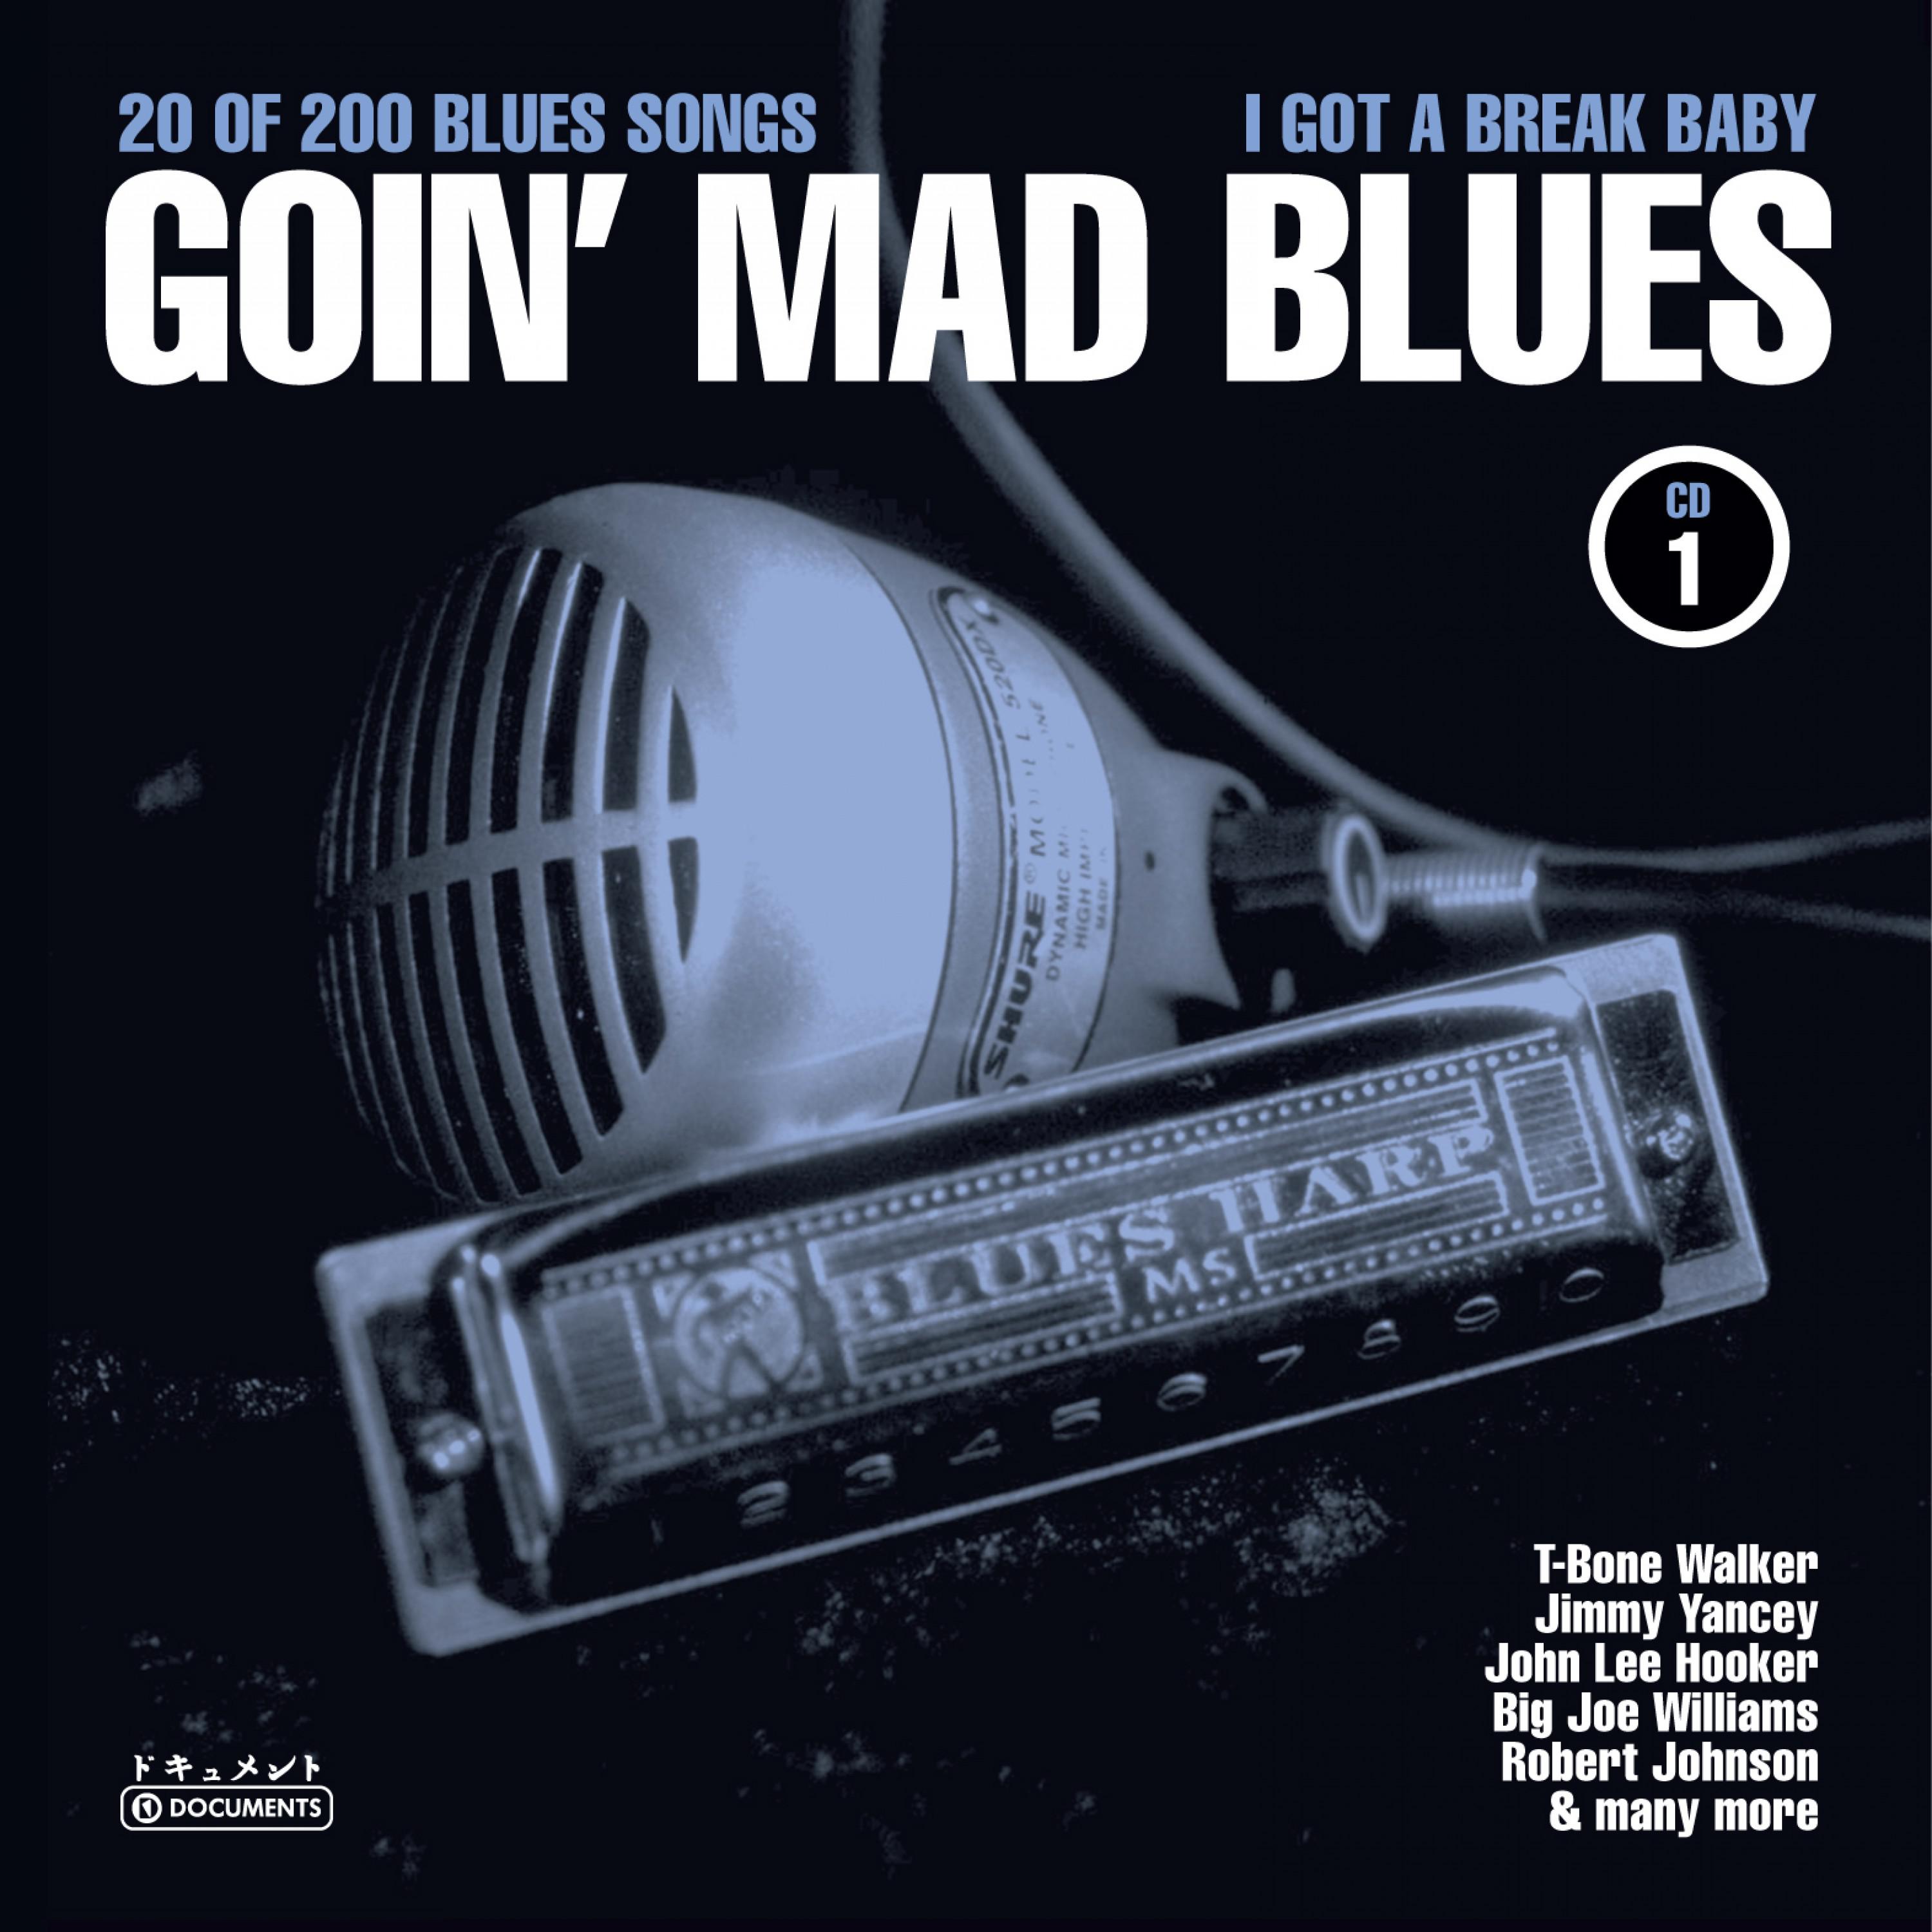 Goin' Mad Blues Vol. 1